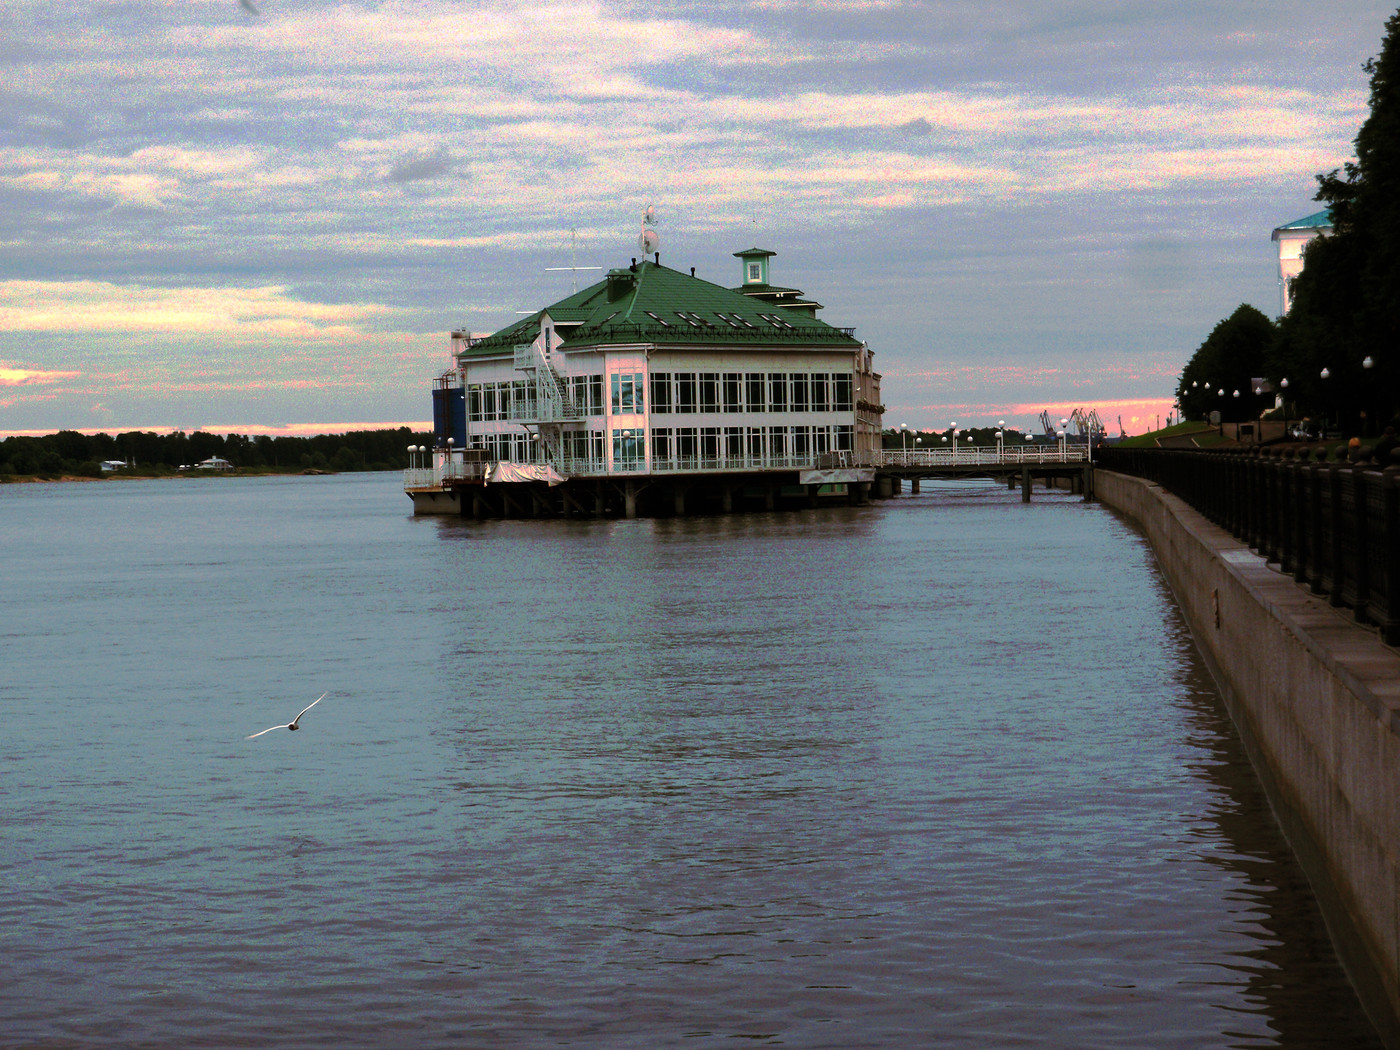 The Volga quay 